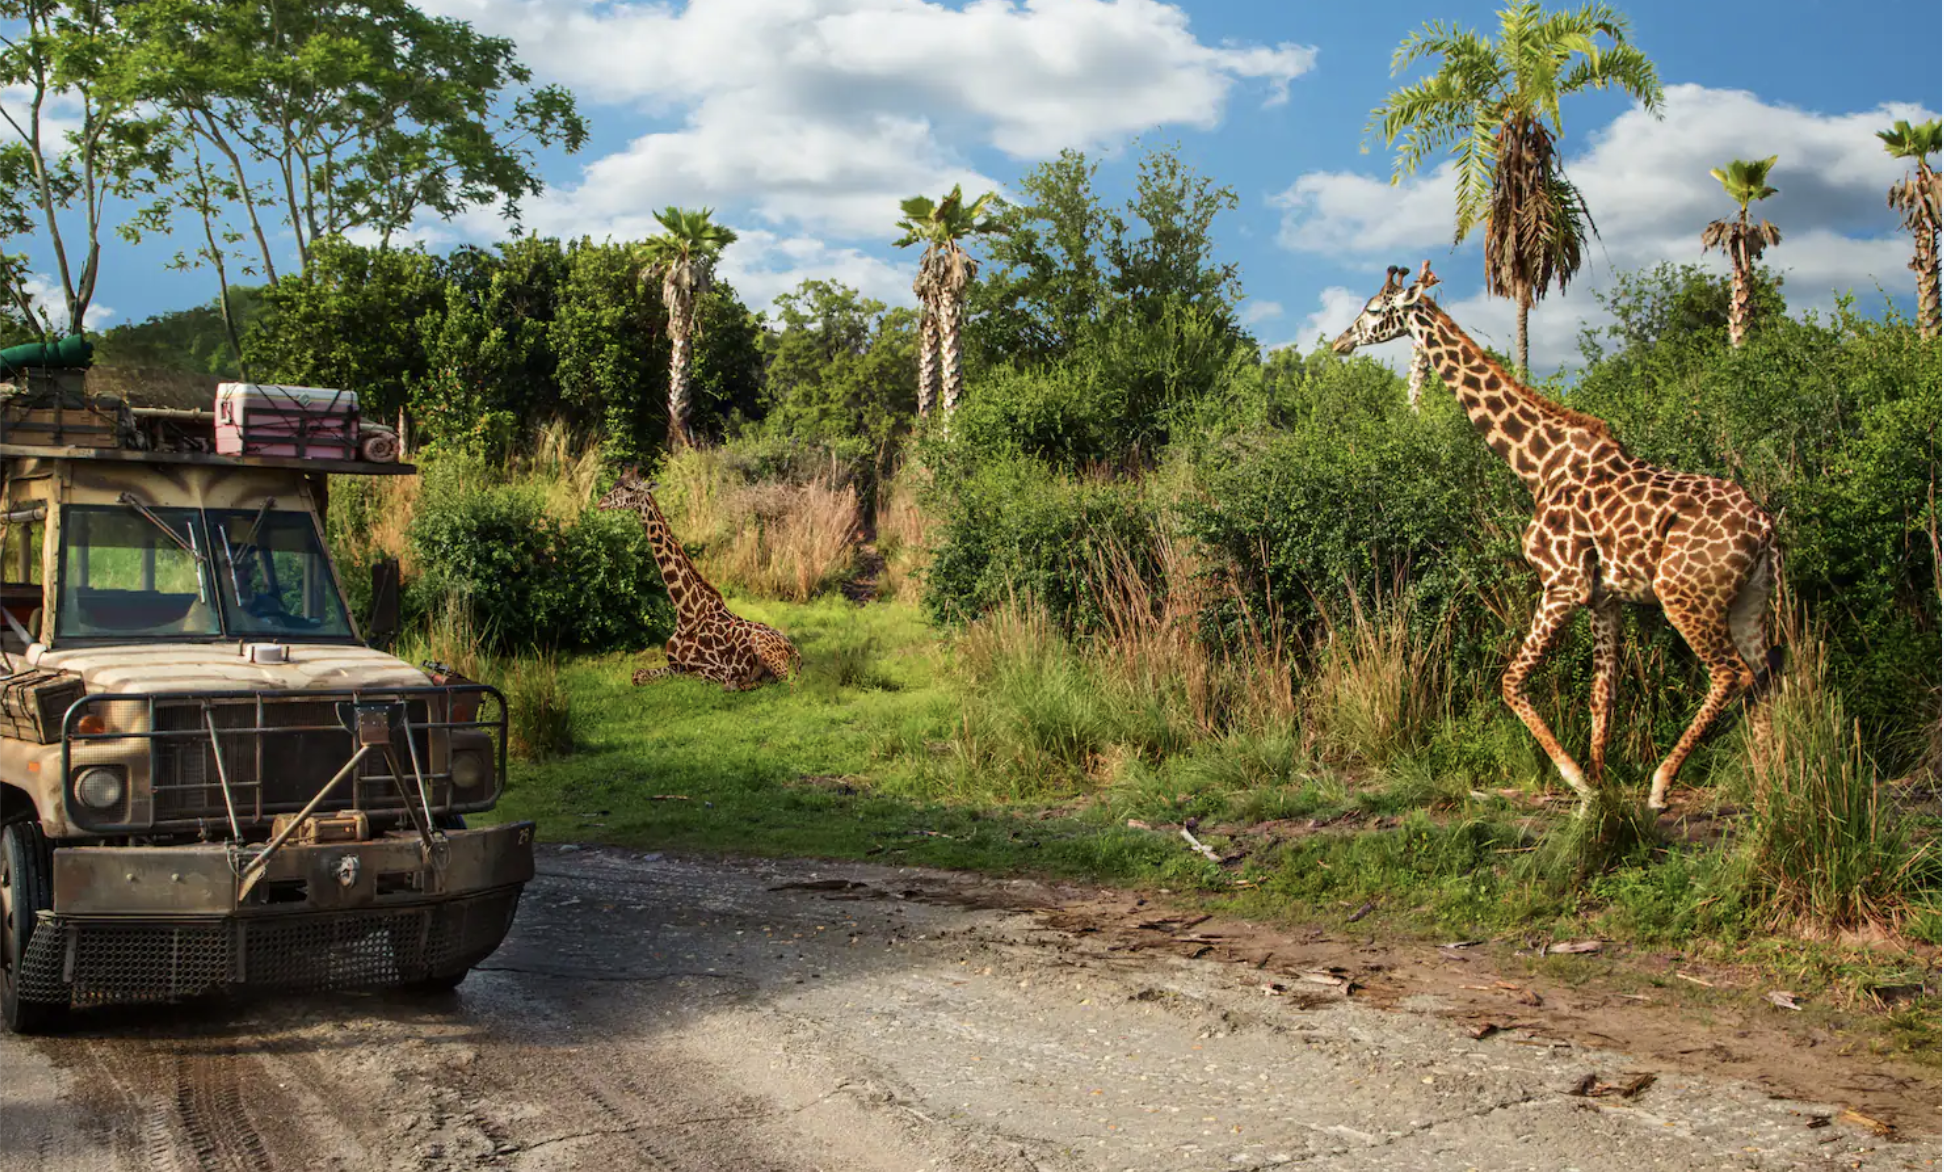 a truck driving next to giraffes during the kilimanjaro safari ride at disney's animal kingdom theme park